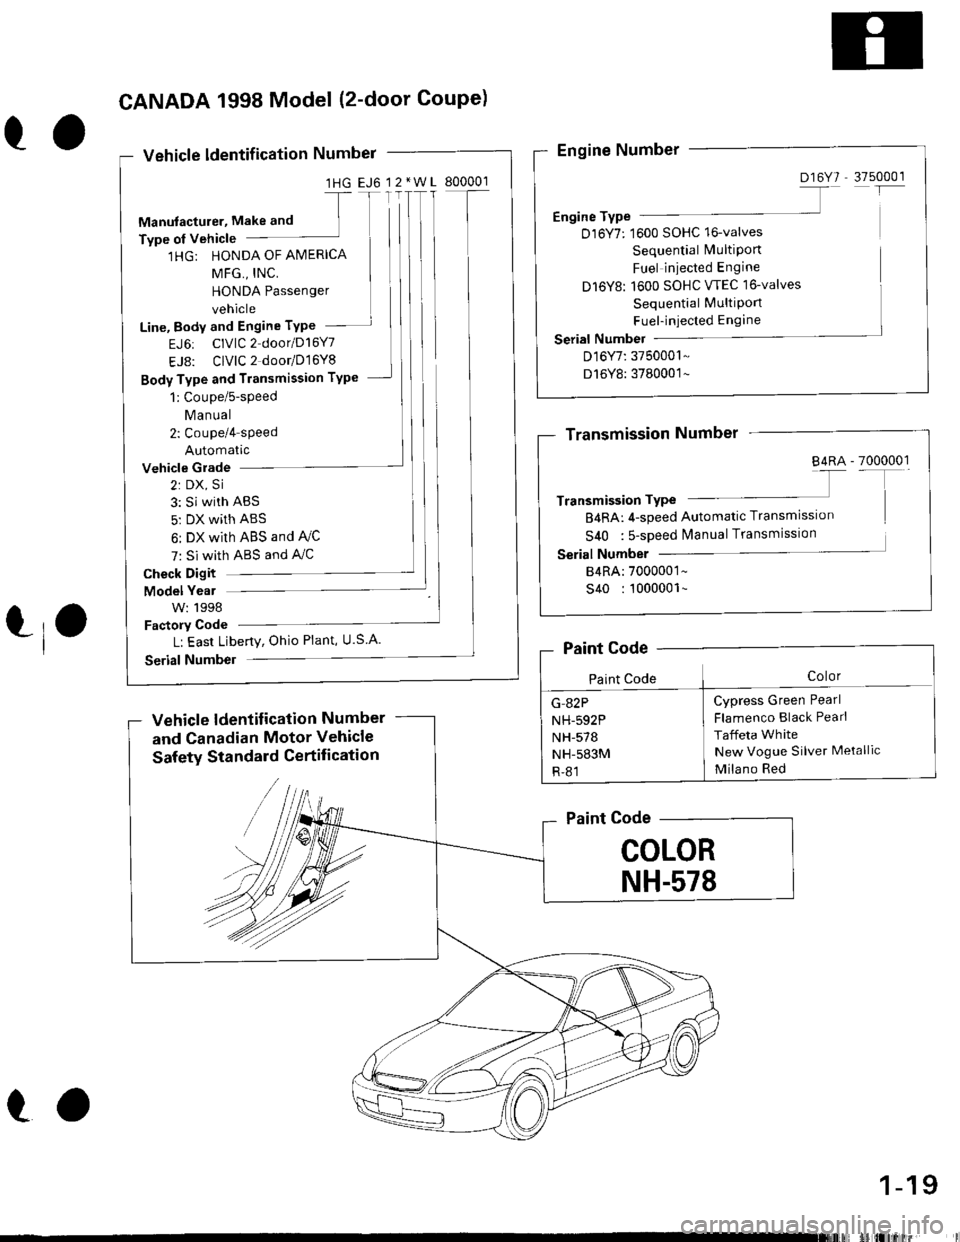 HONDA CIVIC 1998 6.G Owners Manual Vehicle ldentif ication Numbel
1HG EJ6 12*W
1HG: HONDA OF AMERICA
MFG,, INC,
HONDA Passenger
vehicle
Line, Body and Engine TYPe
EJ6: CIVIC 2 door/D16Y7
EJ8: CIVIC 2 dootD16Y8
Body Type and Transmissio